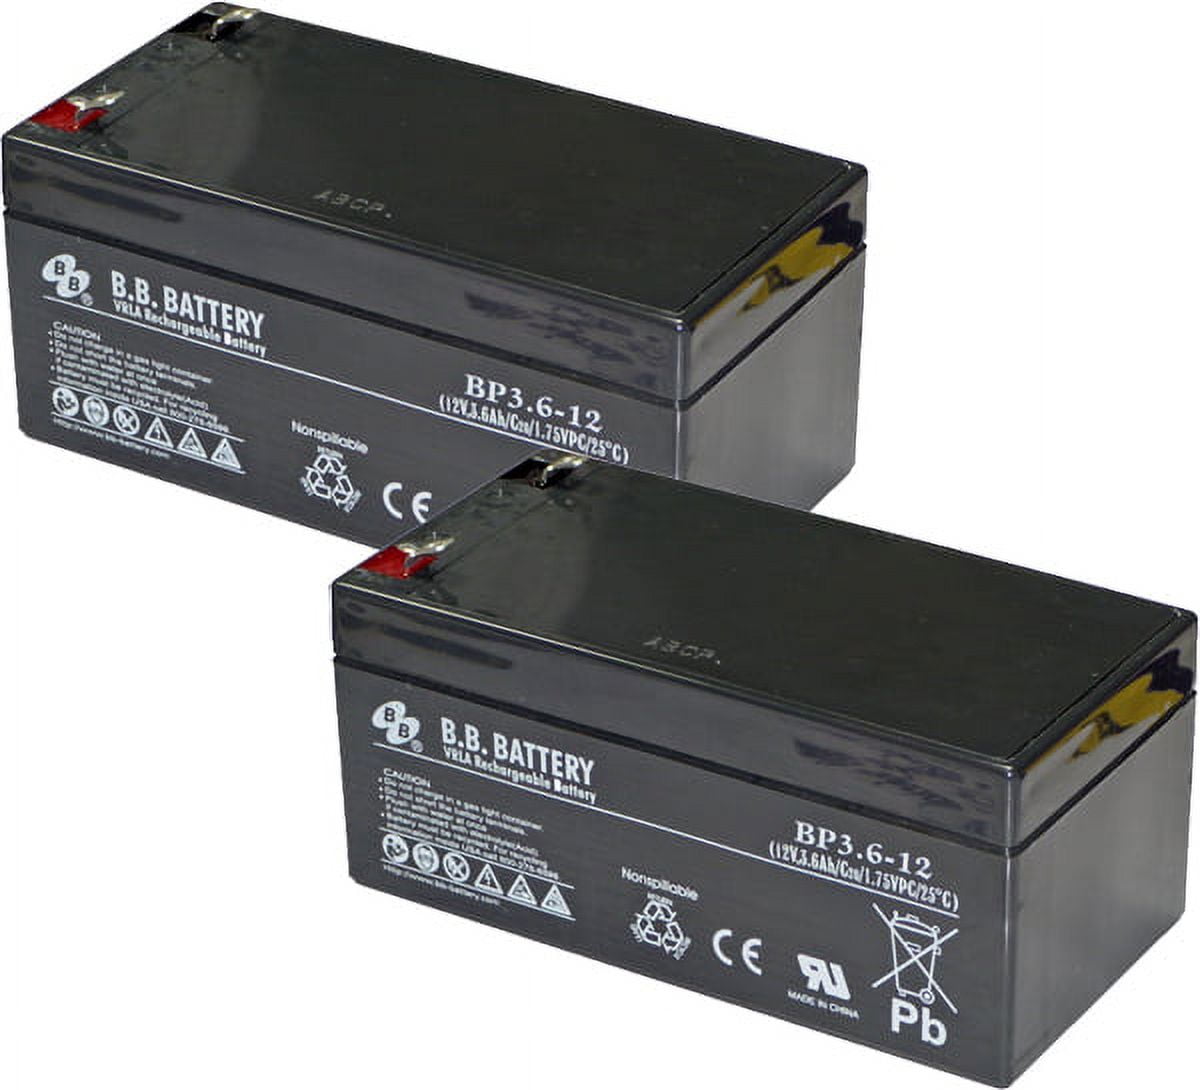 Black & Decker NST1118 Battery 1500mAh Power Tool Battery –